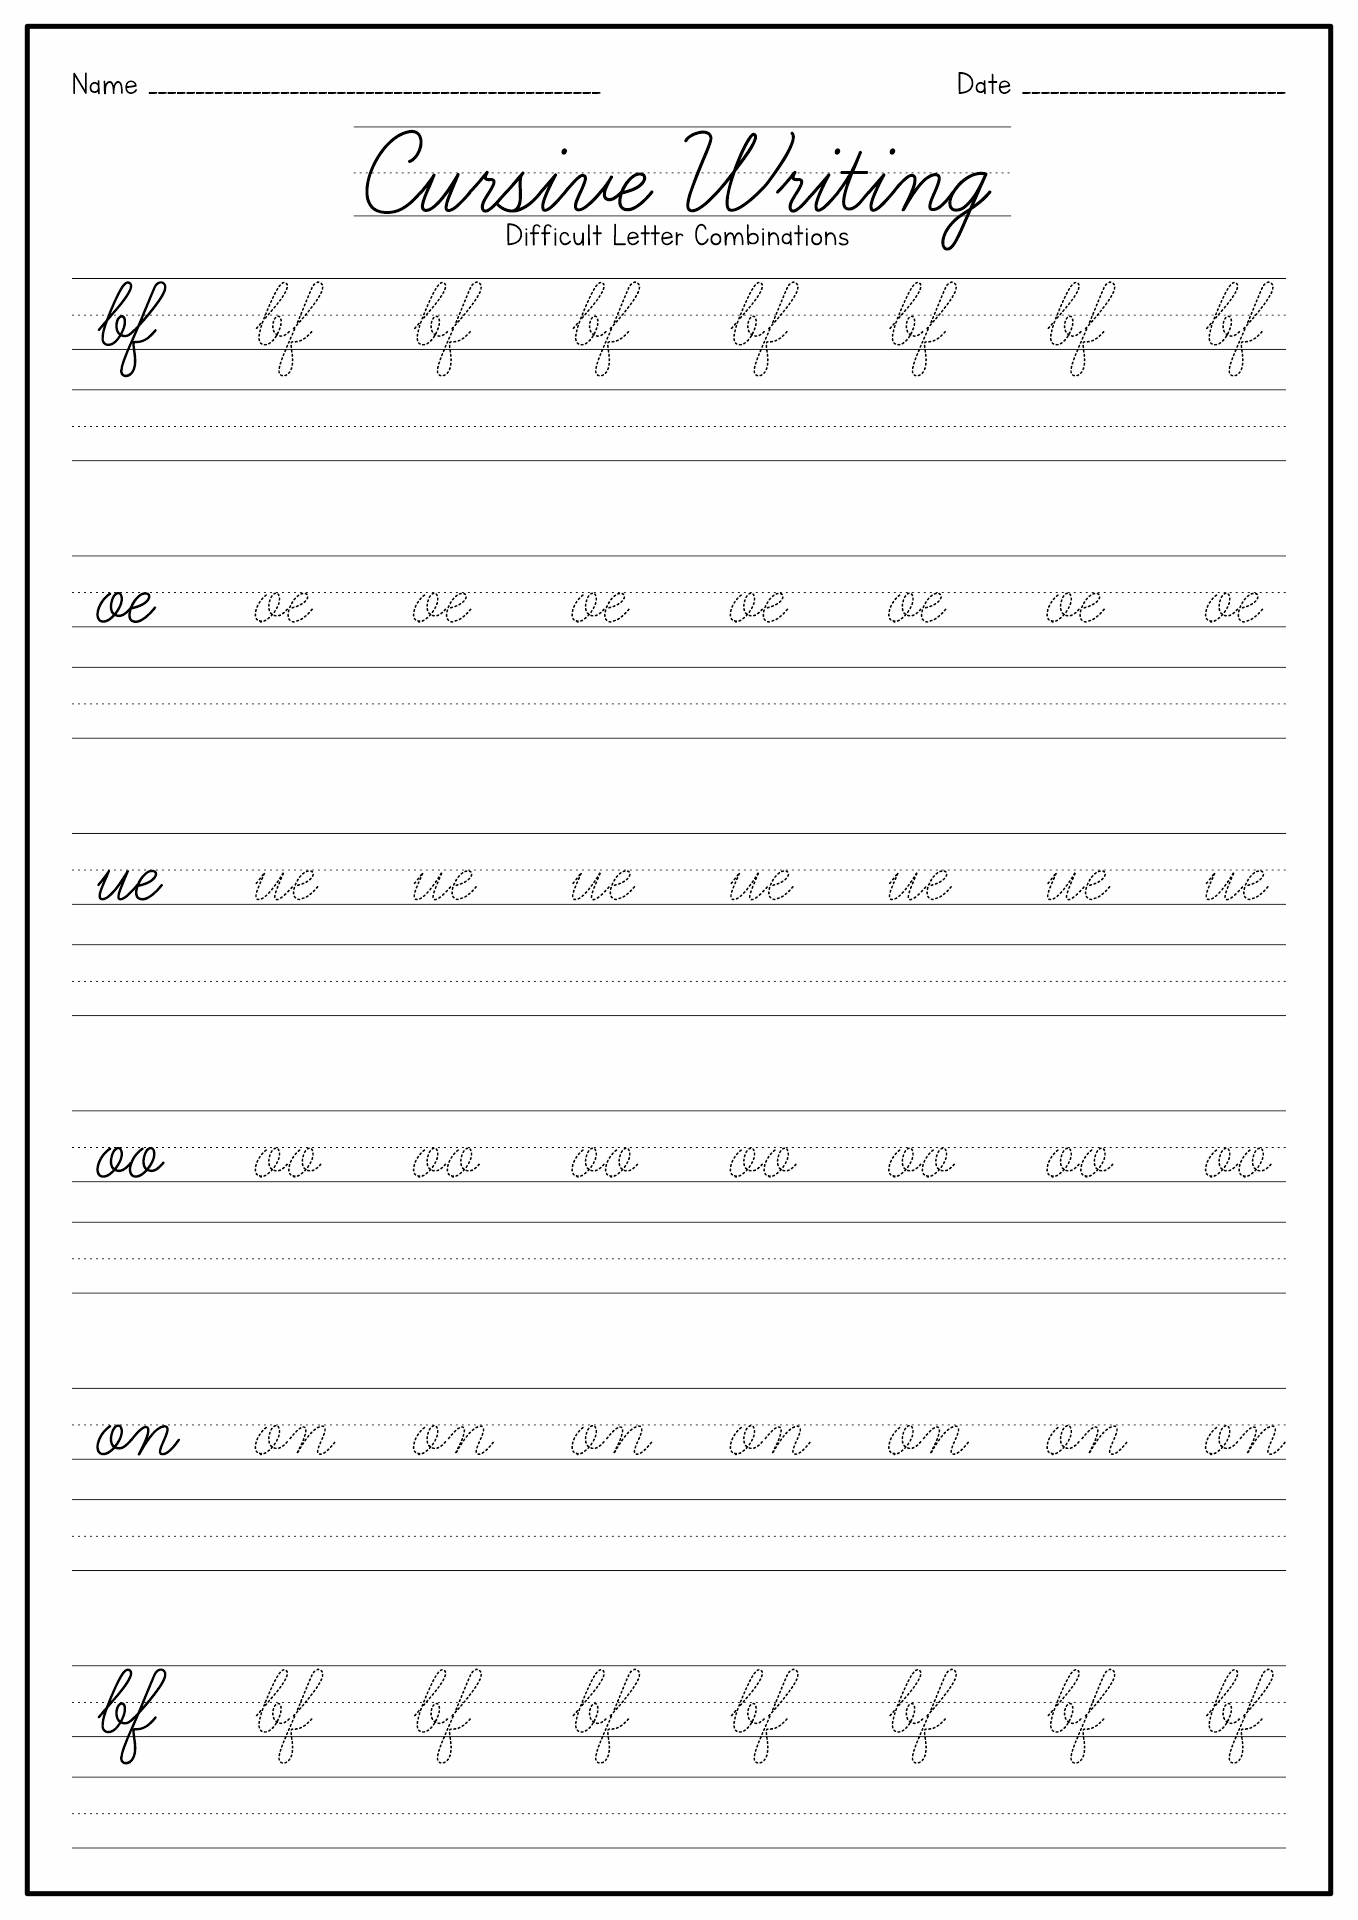 Cursive Handwriting Worksheet Template Image